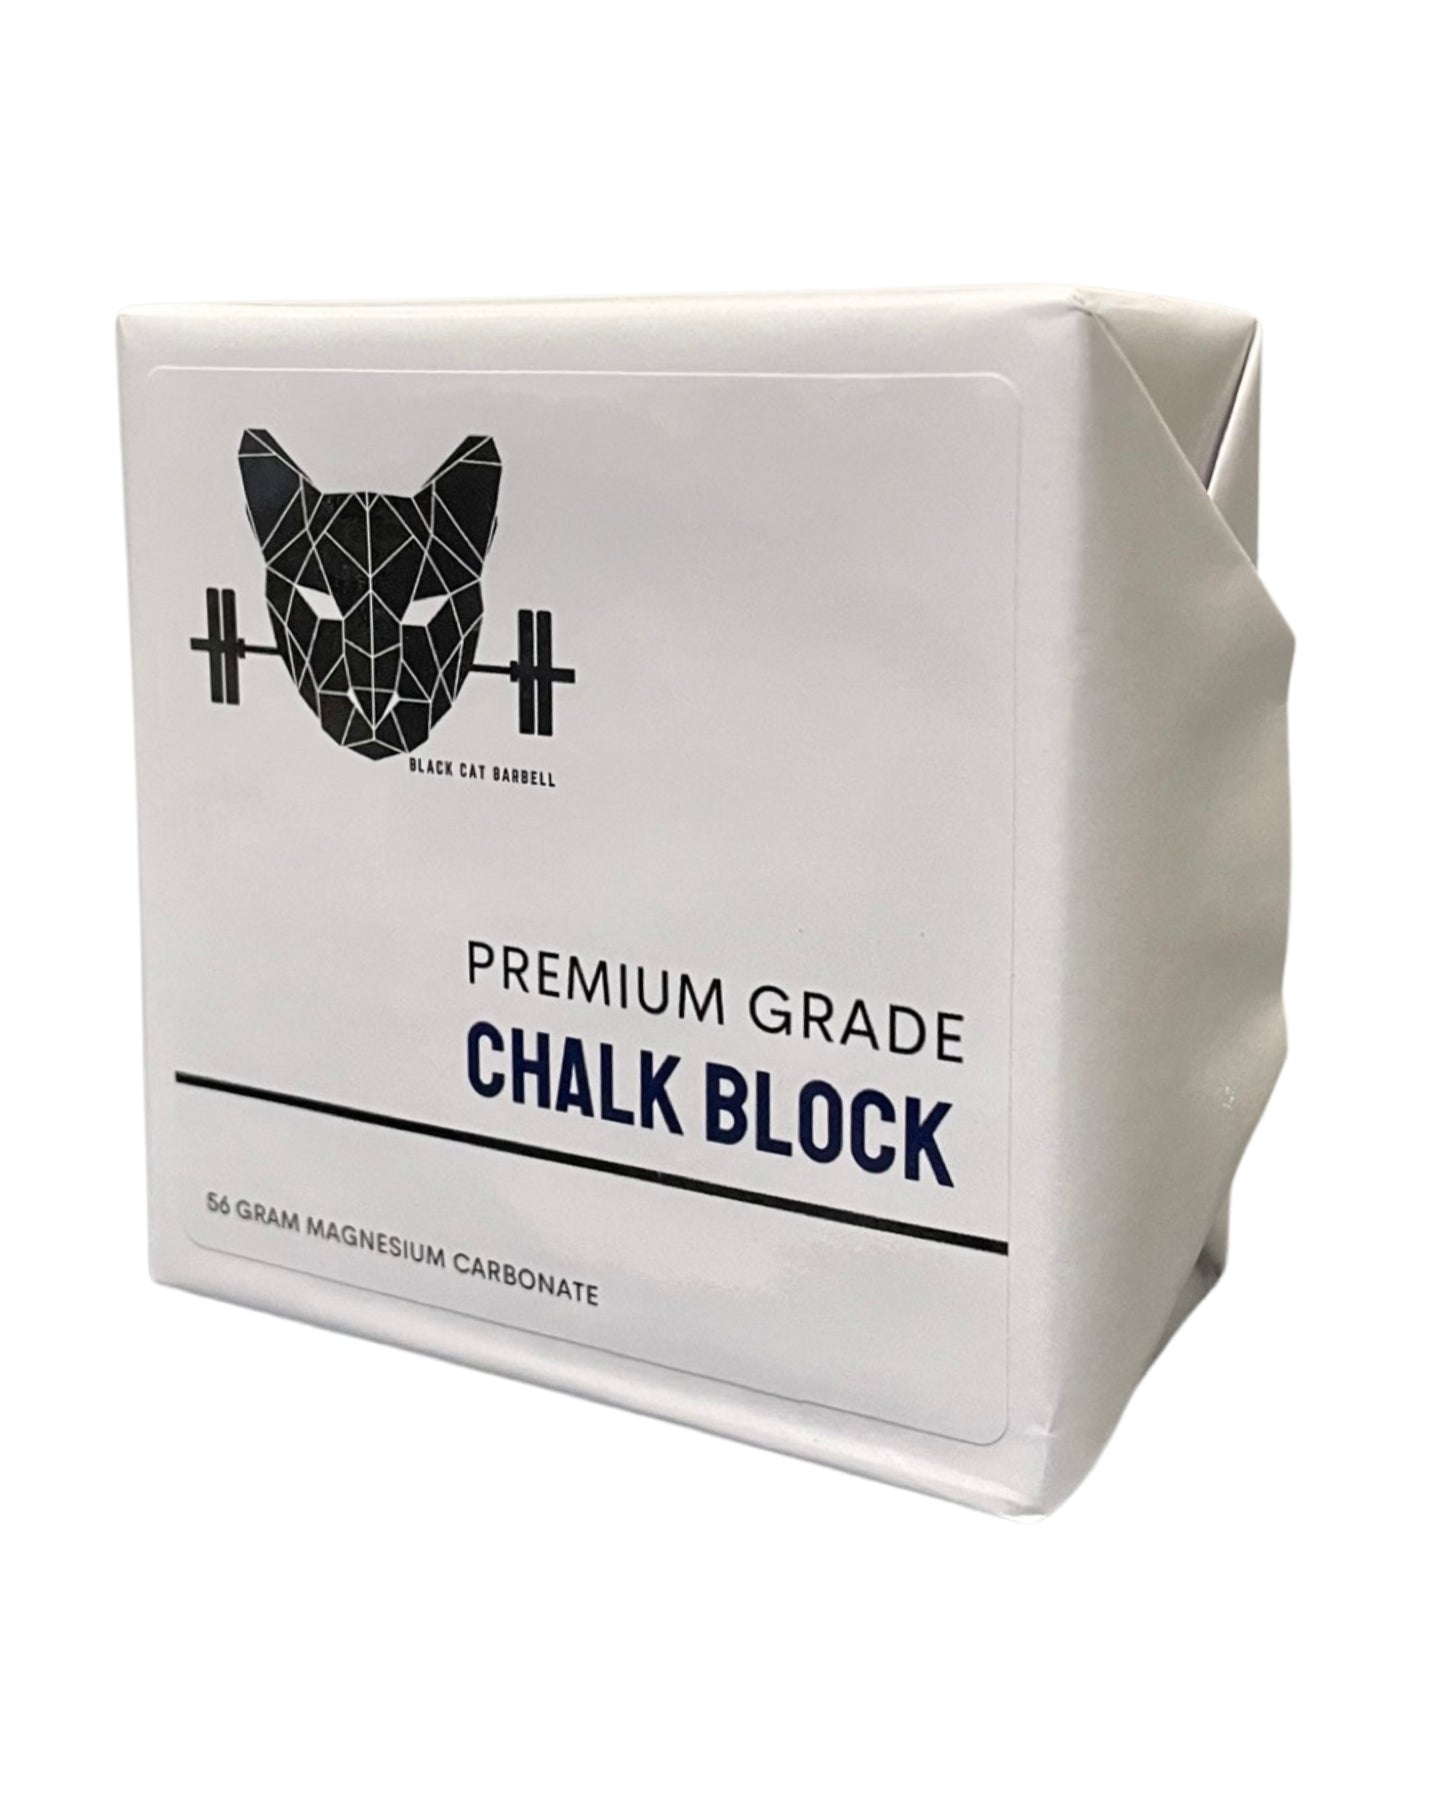 Chalk block